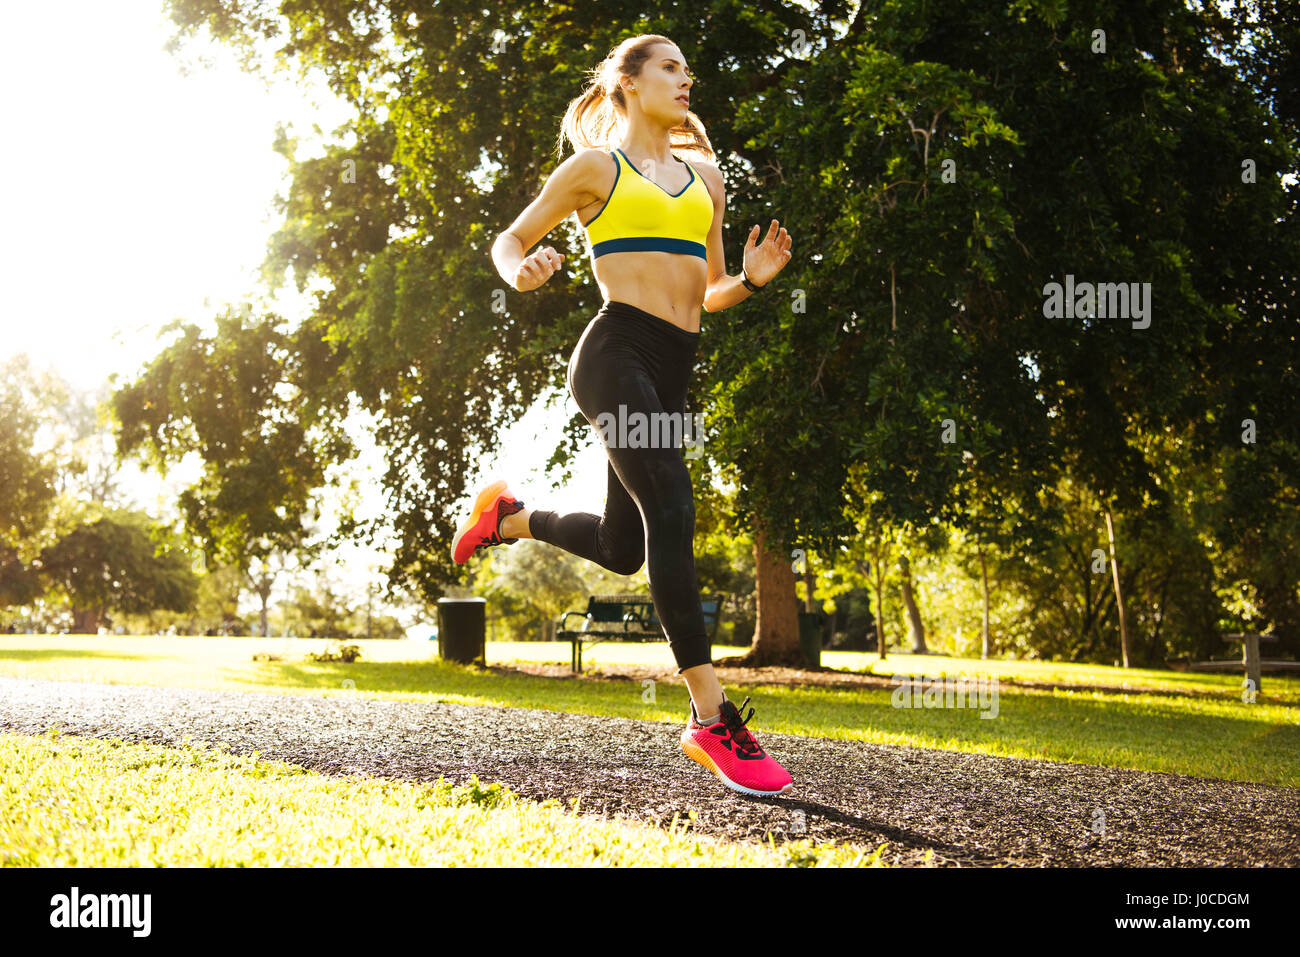 Young female runner running through park Stock Photo